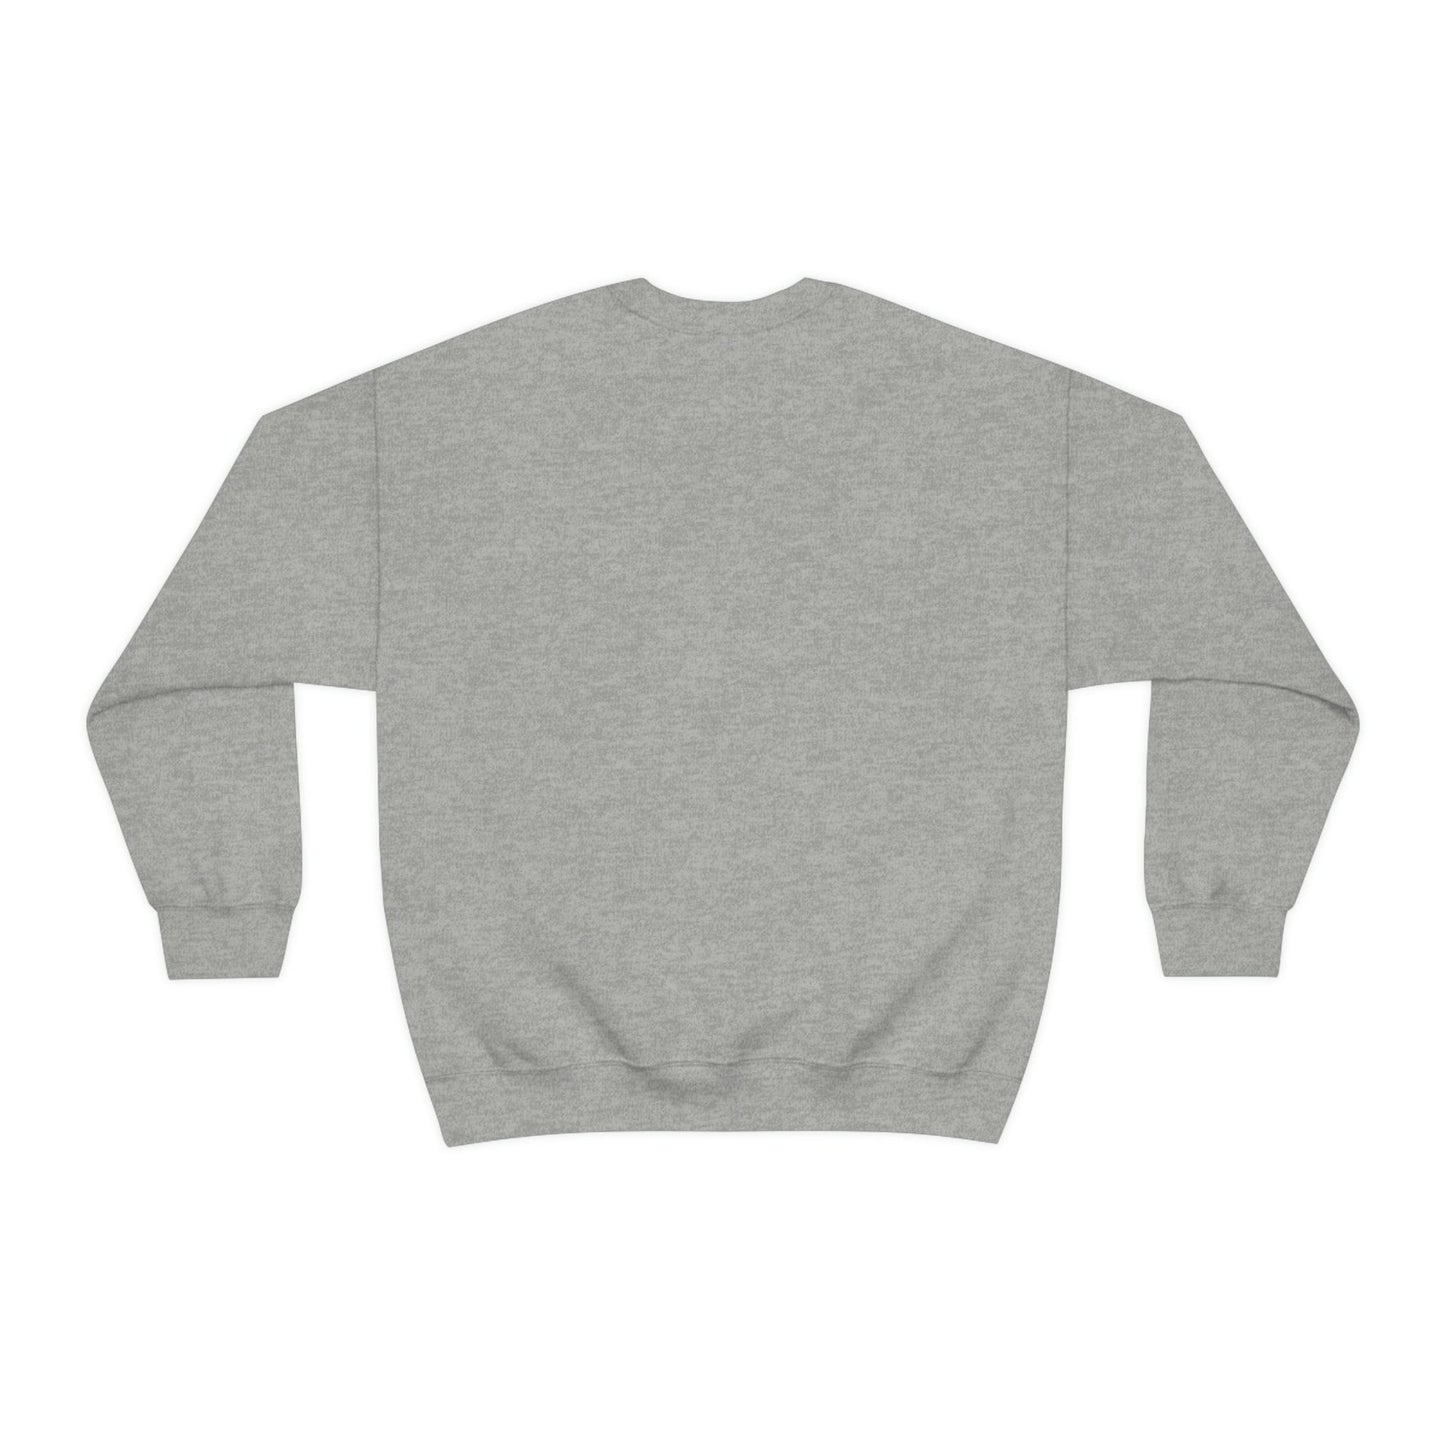 Katherine Pierce Sweatshirt, TVD Sweatshirt, Tvd apparel, TVD merch, Katherine Pierce, The Salvatore brothers, Tvd fan gift